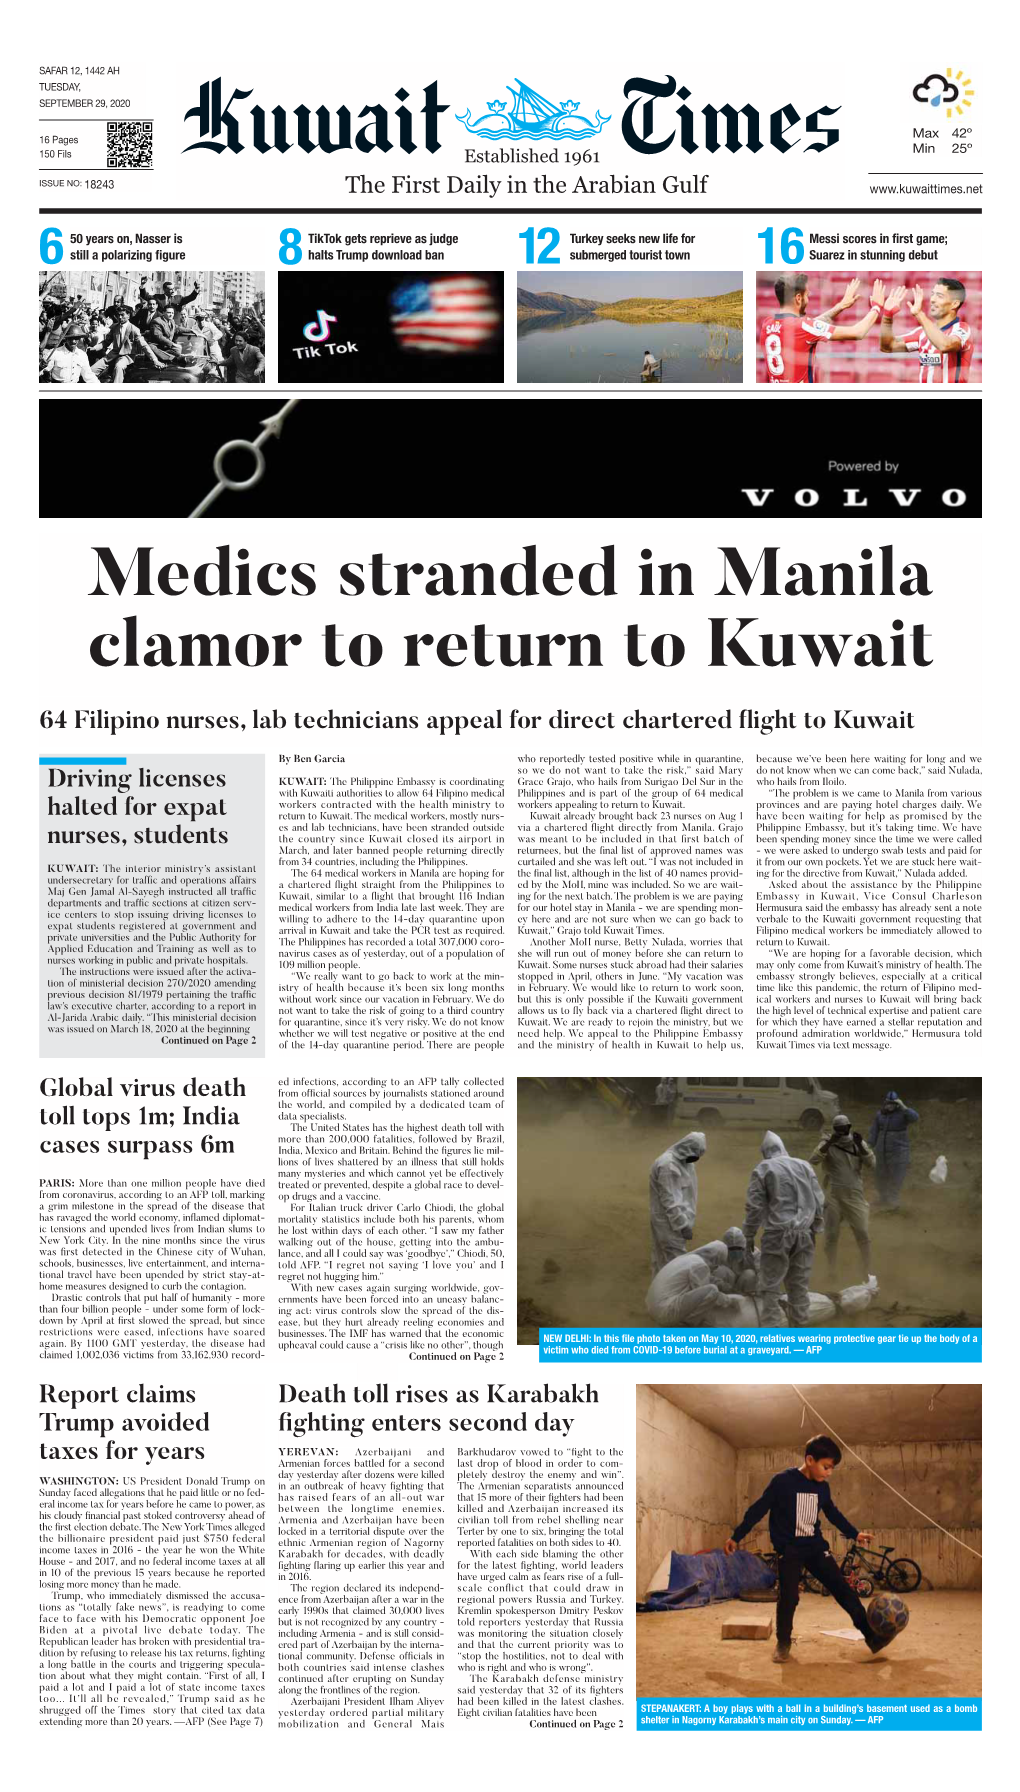 Medics Stranded in Manila Clamor to Return to Kuwait